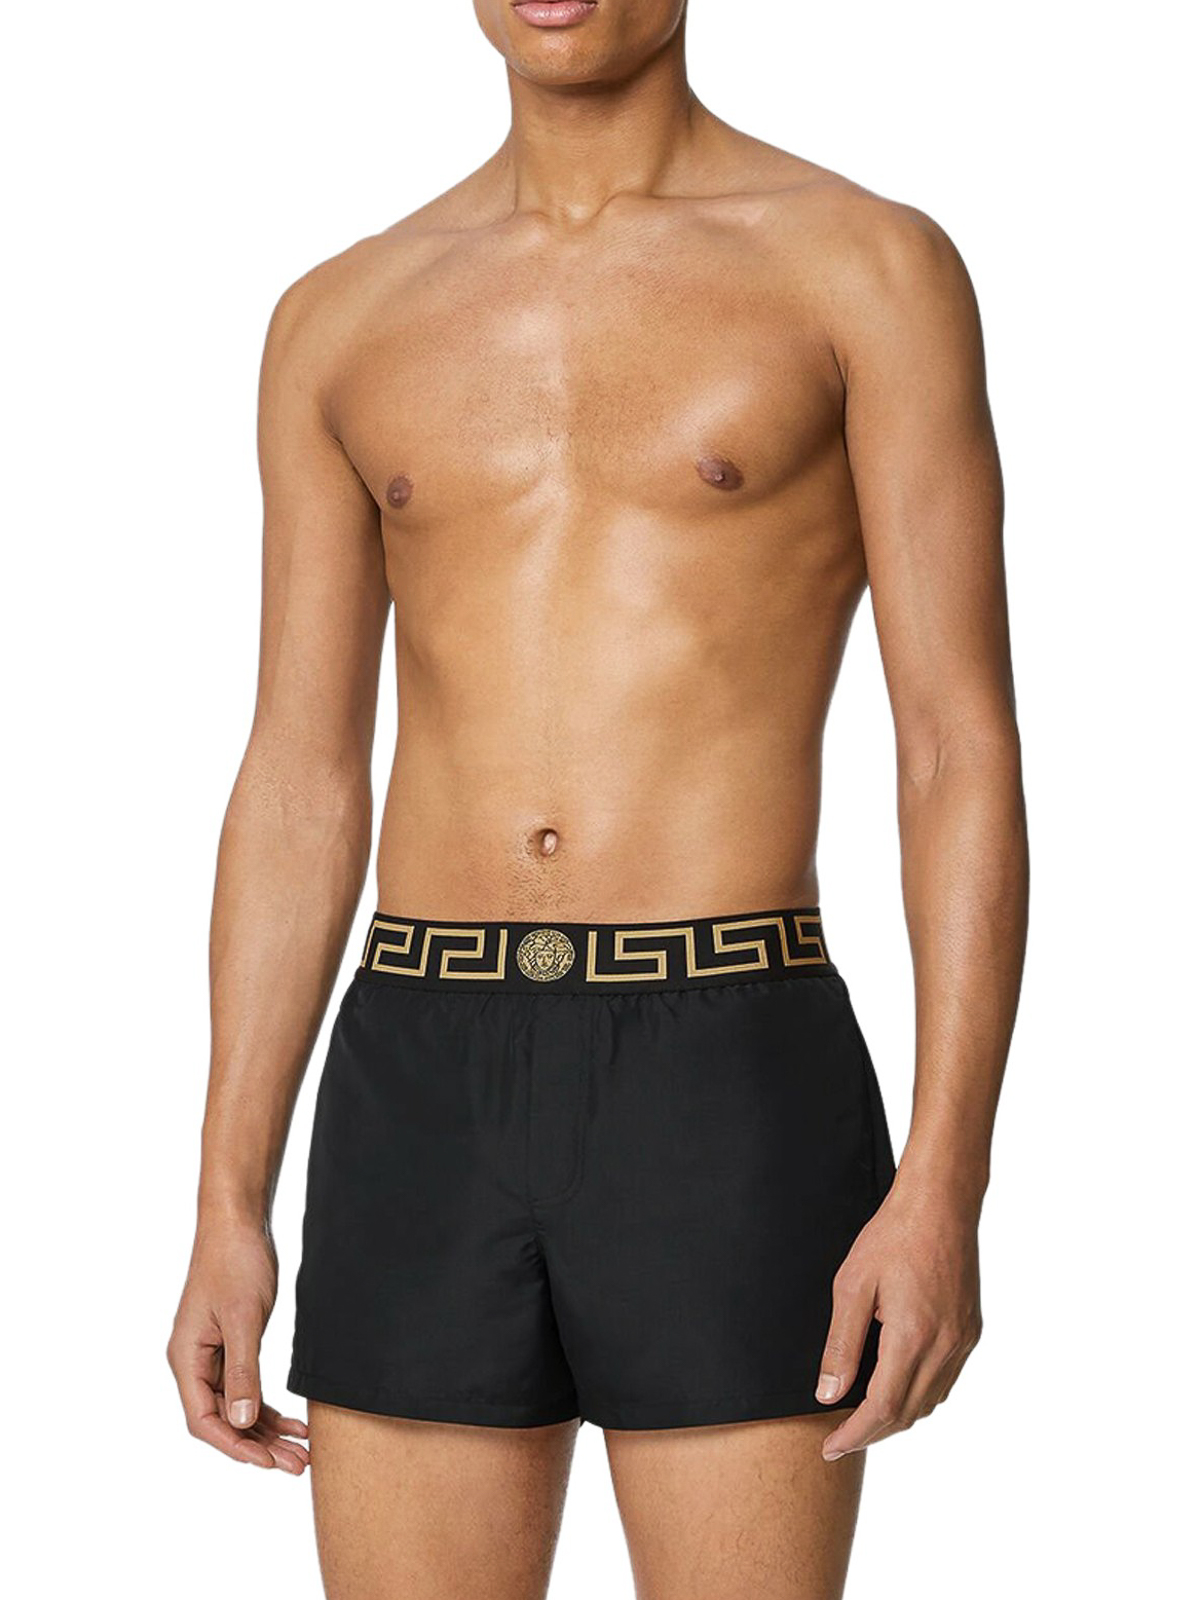 Versterken Leonardoda beginsel Swim shorts & swimming trunks Versace - Swim short with Greek motivo on the  band - 1001609A232415A80G